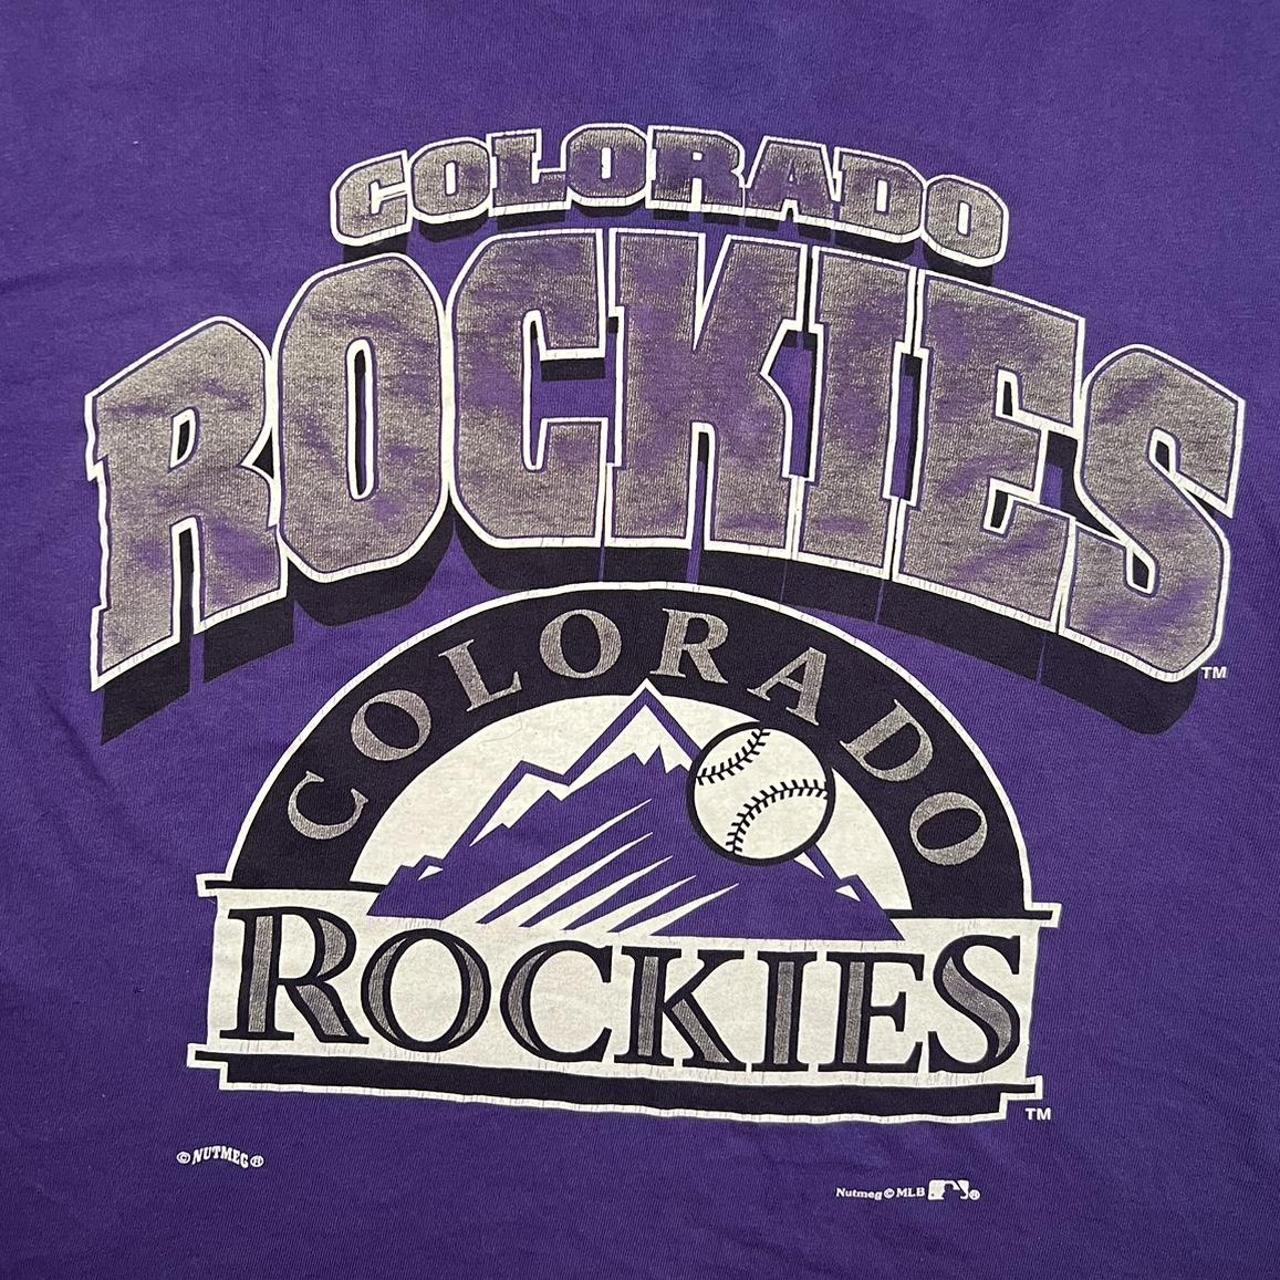 VTG Nutmeg Colorado Rockies Purple 90s MLB Jersey Print USA T 